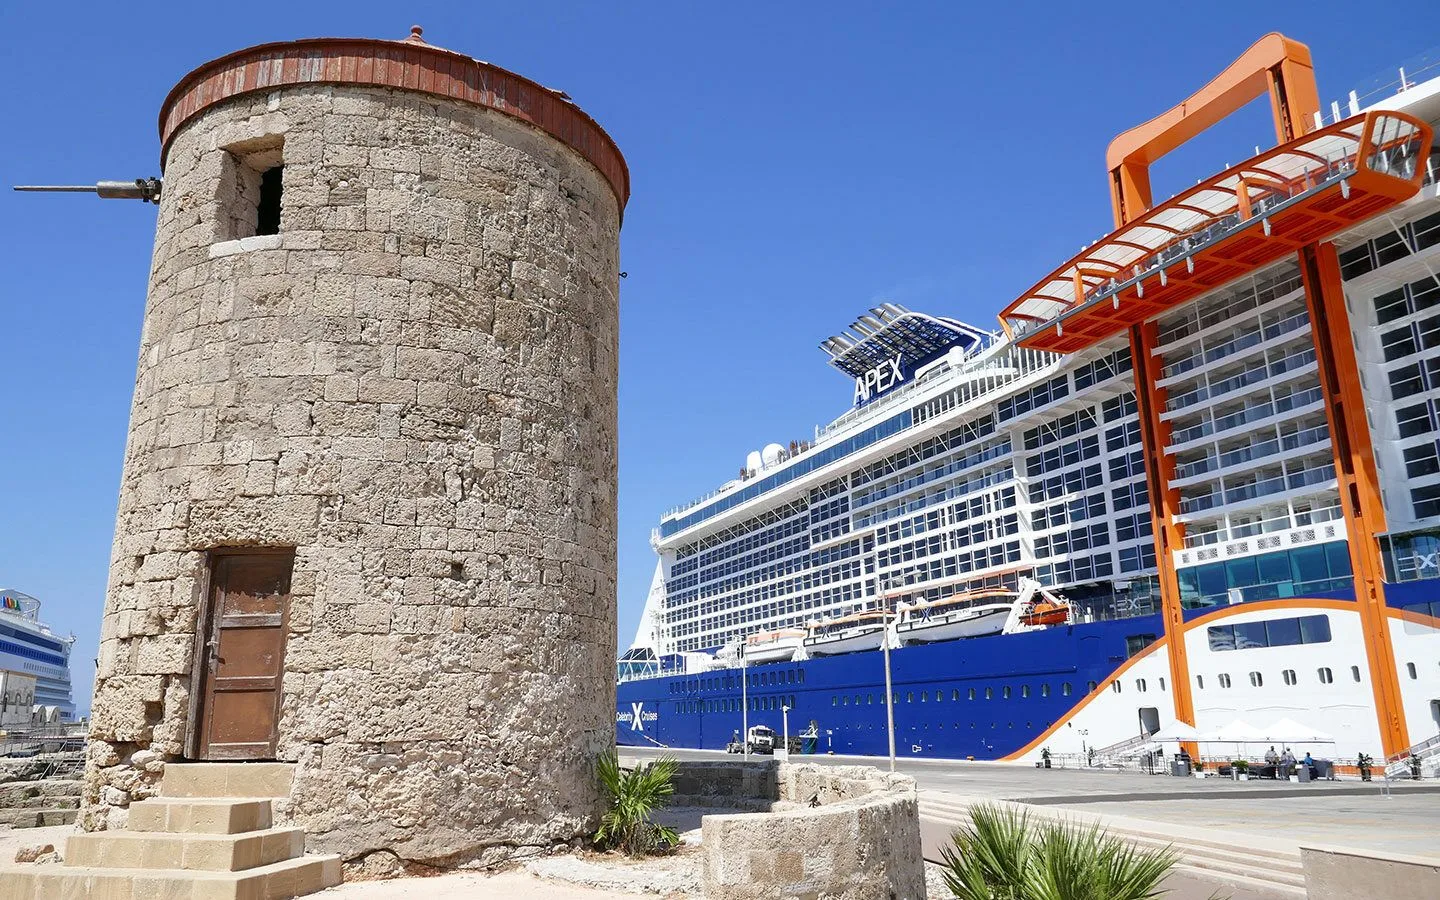 Celebrity Apex cruise ship in in Rhodes, Greece